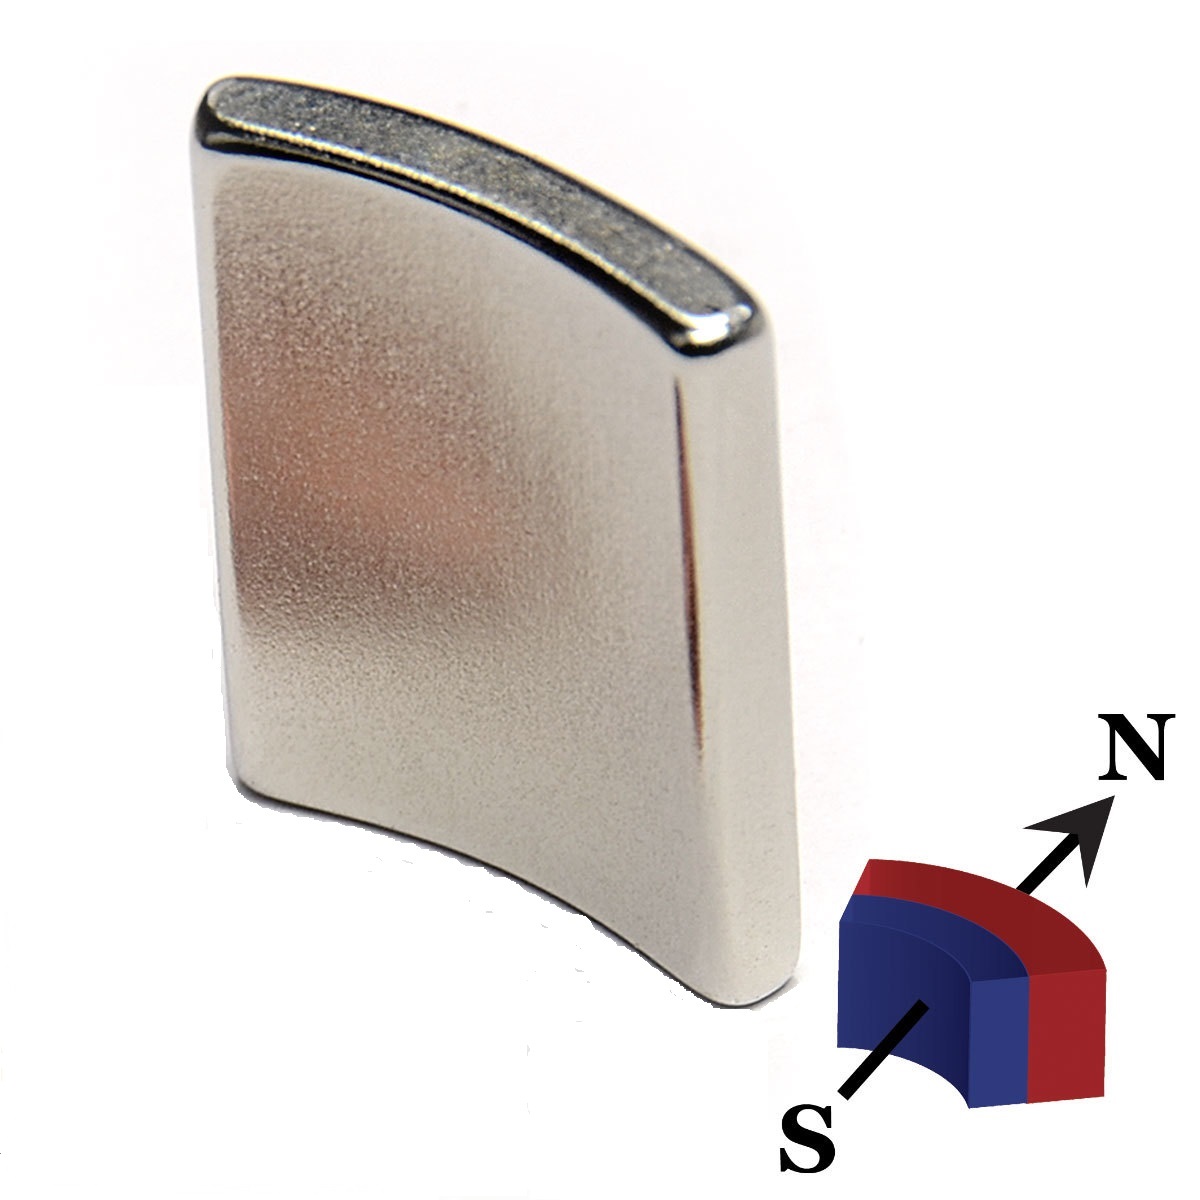 Neodym-Segment Magnete Arc Segment Magneten Magnet Bogen Magnet Motormagnet, Magnet, Magnete, Supermagnete